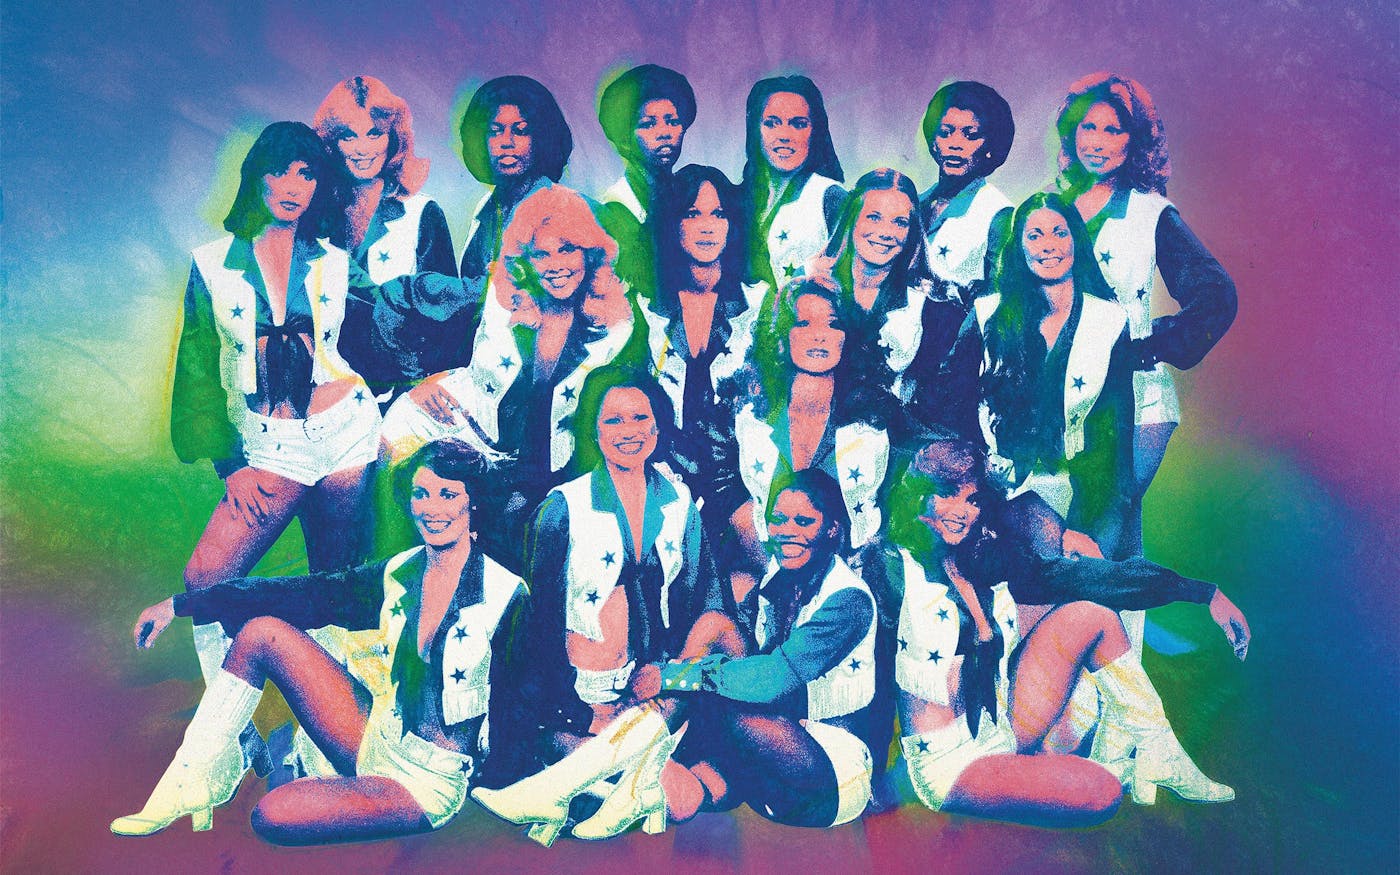 Vintage Nudist Pageants - Sex, Scandal, and Sisterhood: Fifty Years of the Dallas Cowboys Cheerleaders